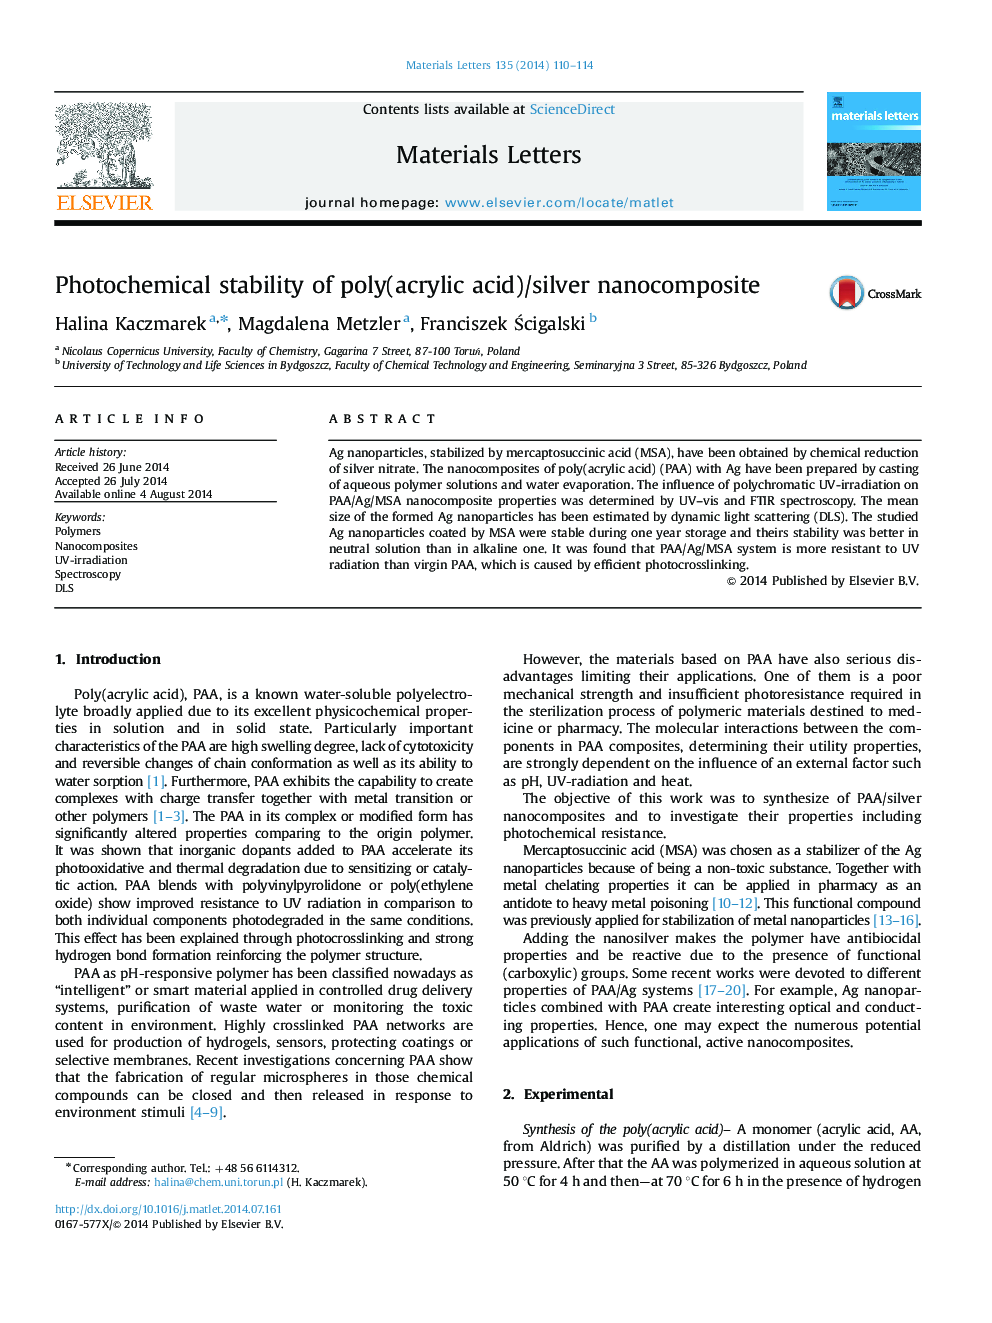 Photochemical stability of poly(acrylic acid)/silver nanocomposite